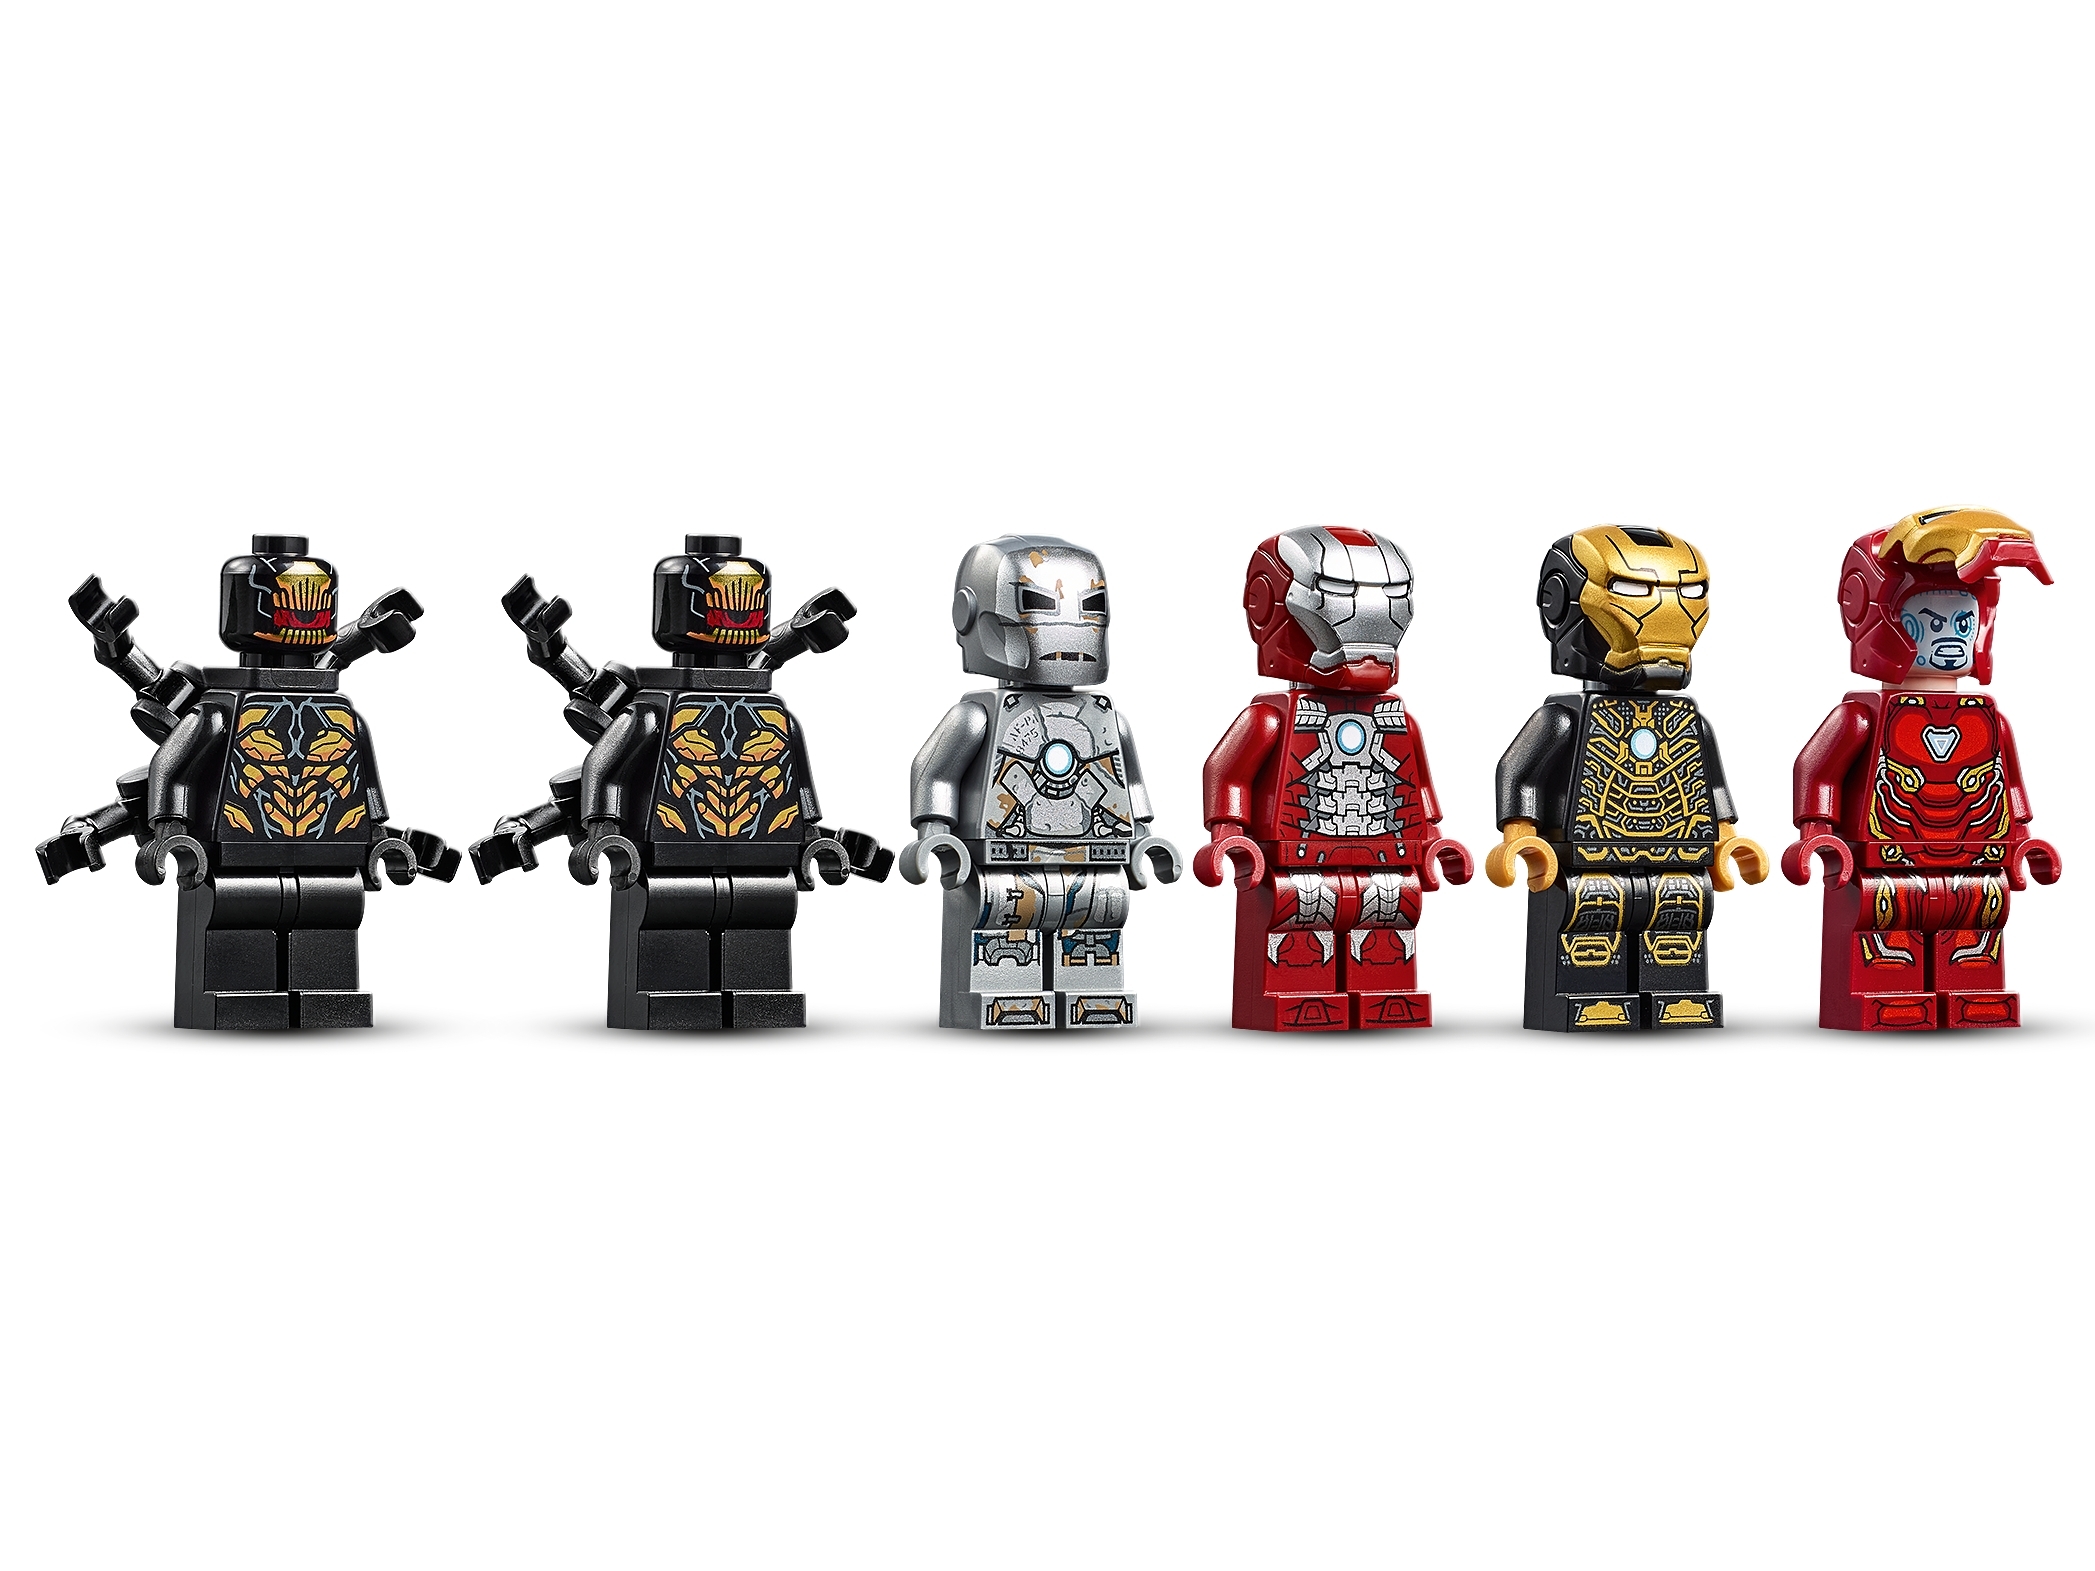 Marrvel Avengers Endgame Iron Man Hall of Armor 76125 Building Blocks Toy DIY Se 